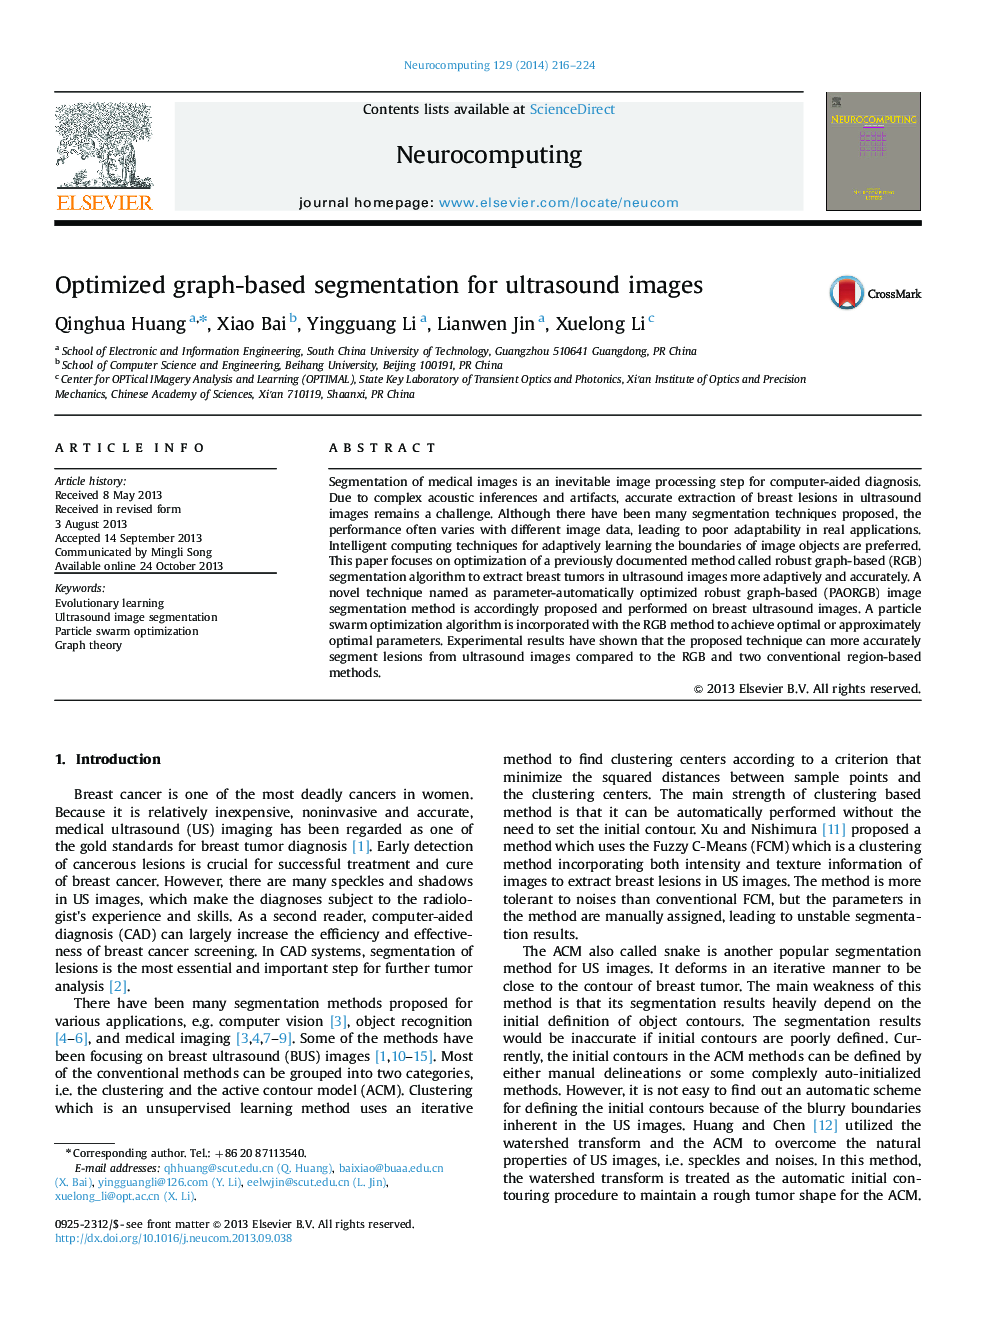 Optimized graph-based segmentation for ultrasound images